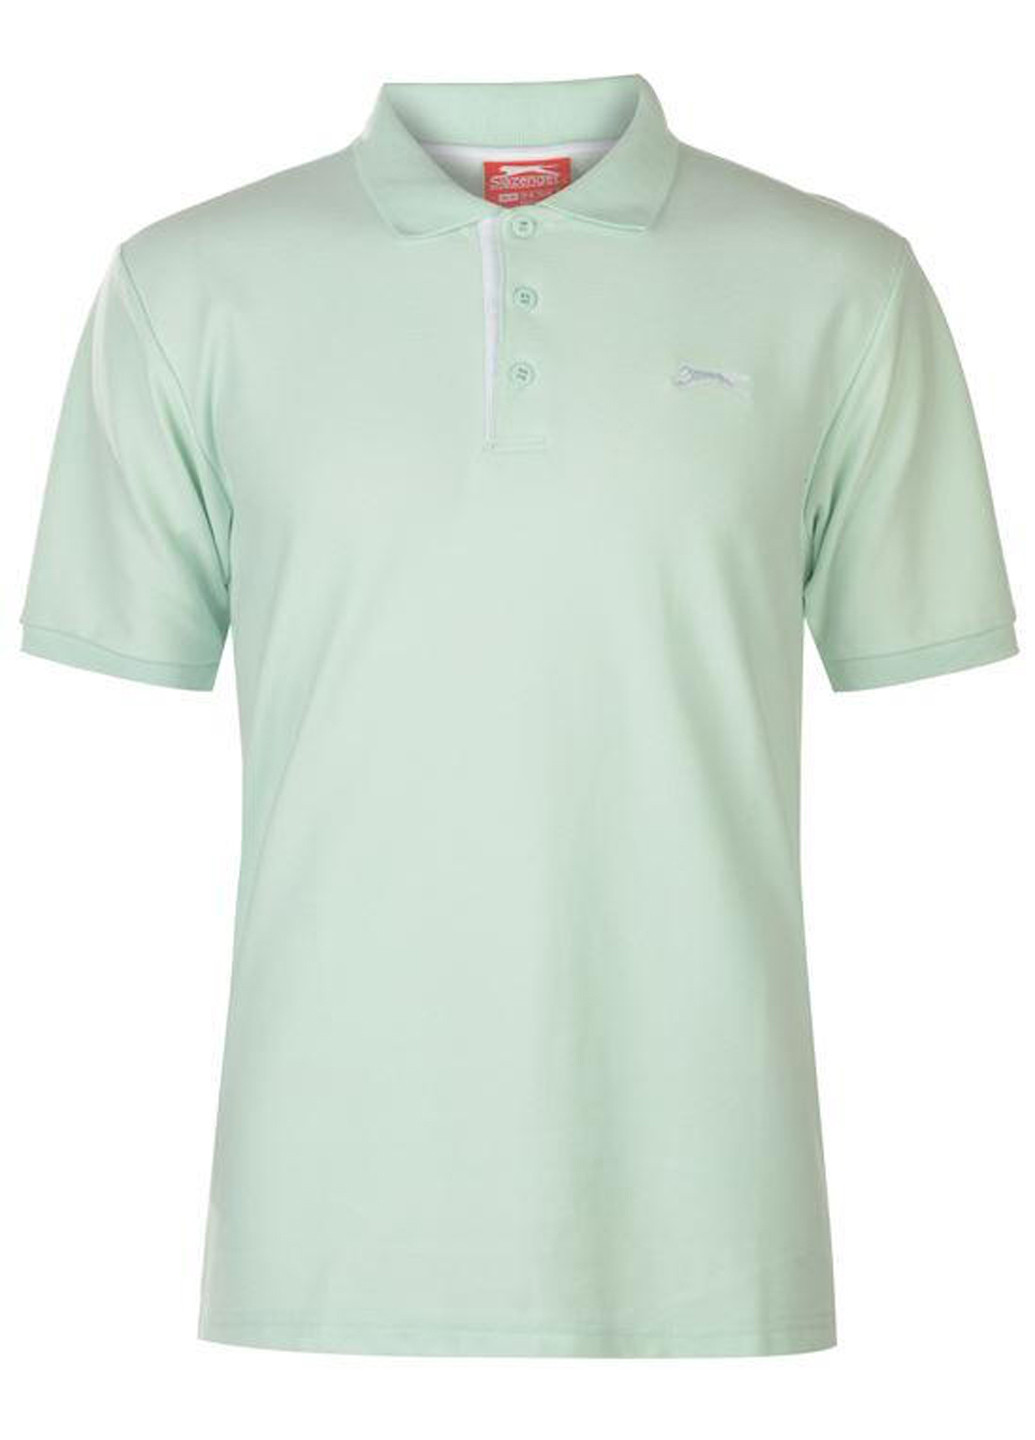 Бледно-зеленая футболка-поло для мужчин Slazenger с логотипом